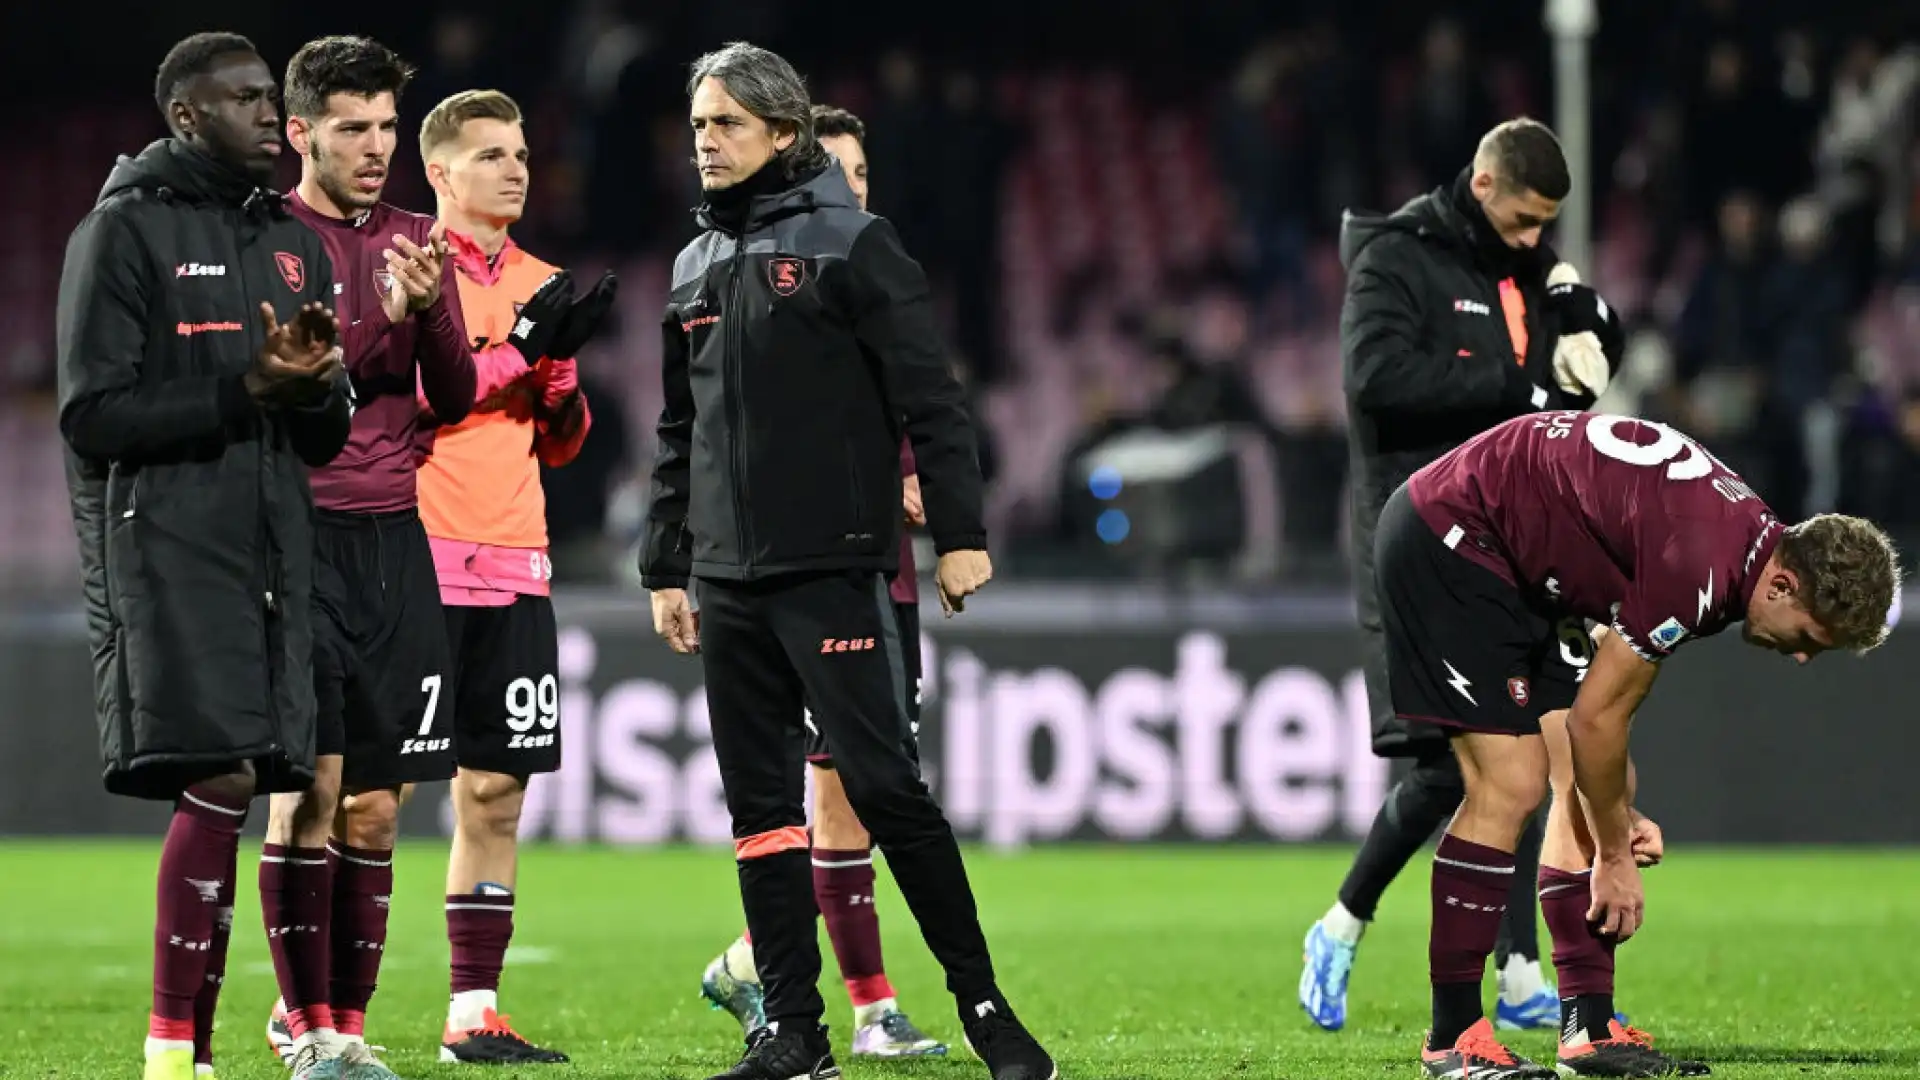 Salernitana, Filippo Inzaghi does not lose faith